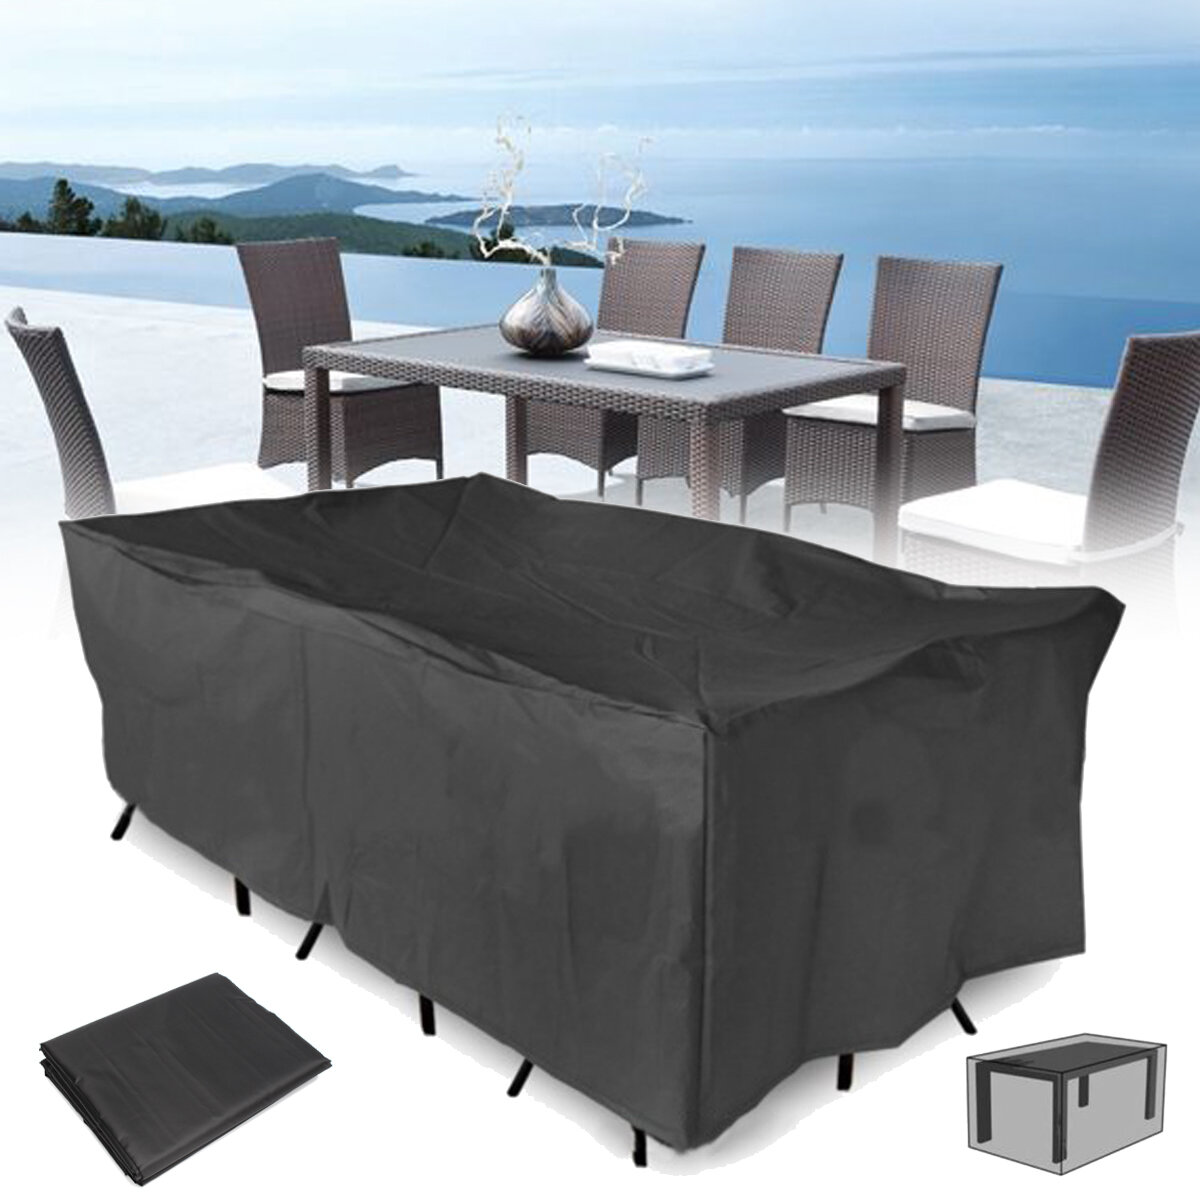 320x220x70CM Outdoor Garden Patio Mobili impermeabile copertura antipolvere Table Chair Sun Shelter